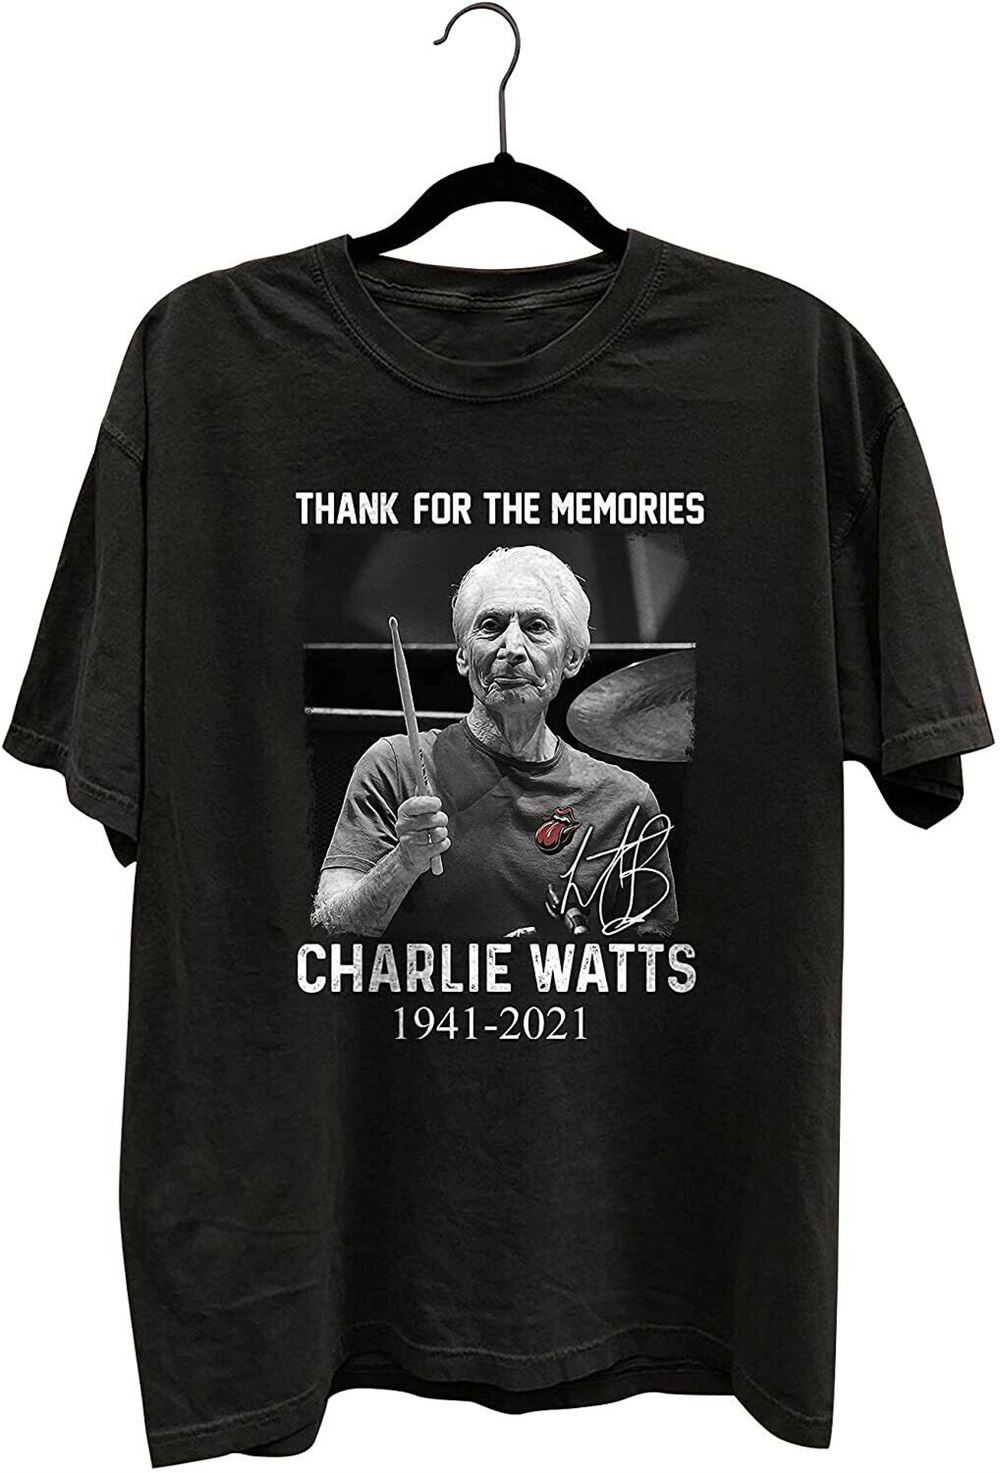 Bestseller Charlie Watts Shirt Rip Charlie Watts T Shirt The Rolling Stone Shirt